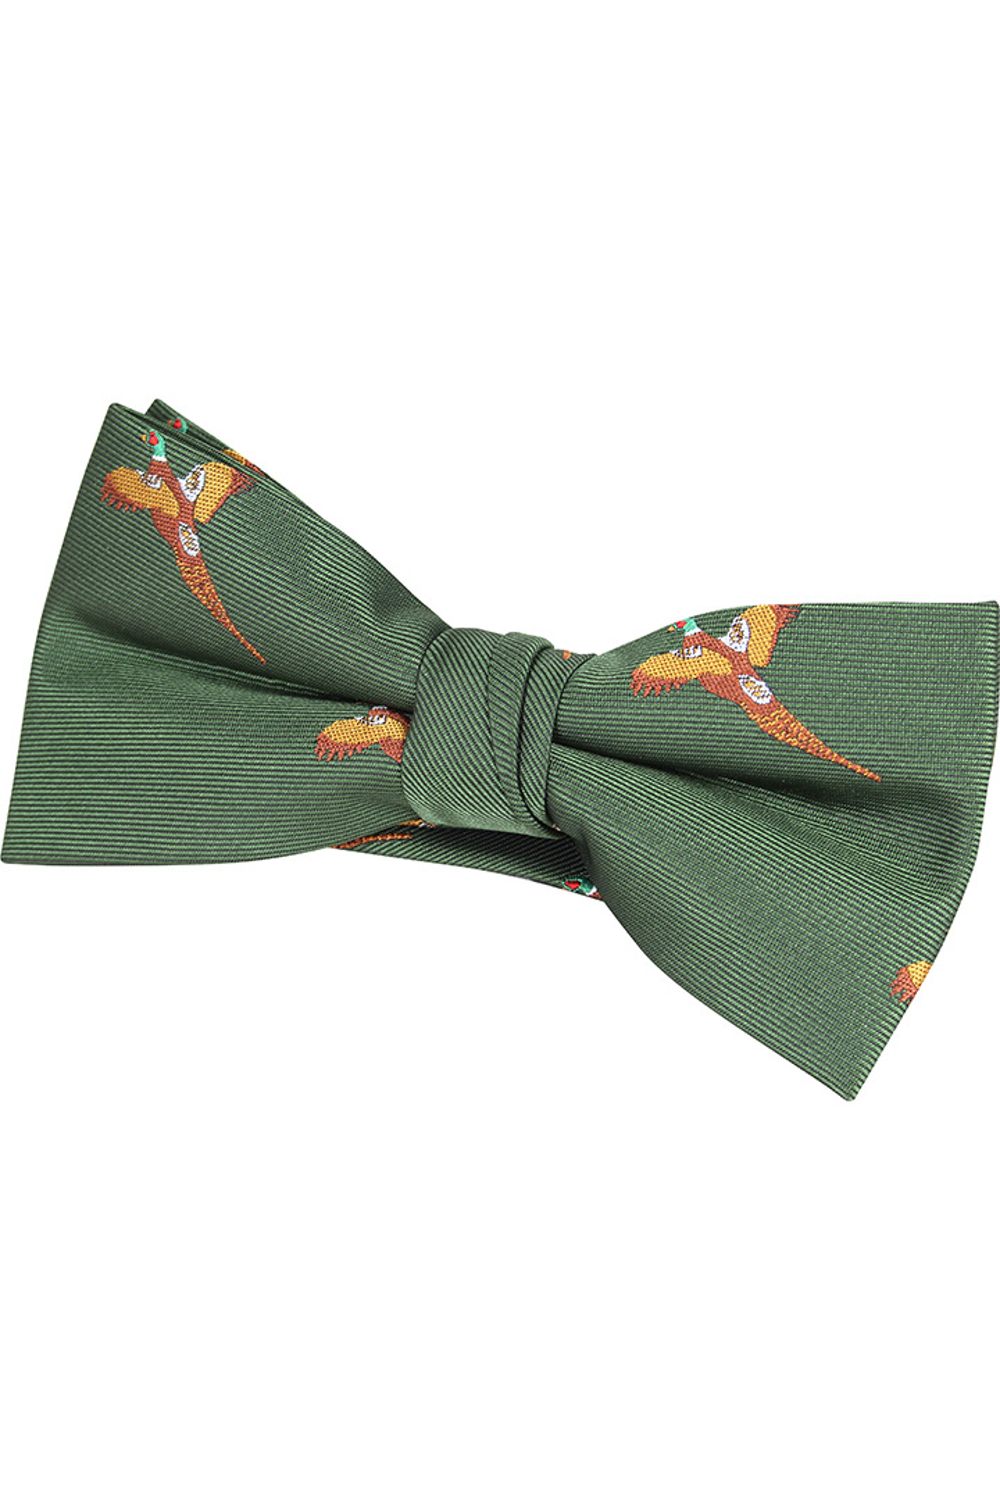 Jack Pyke Bow Tie In Green Pheasant 